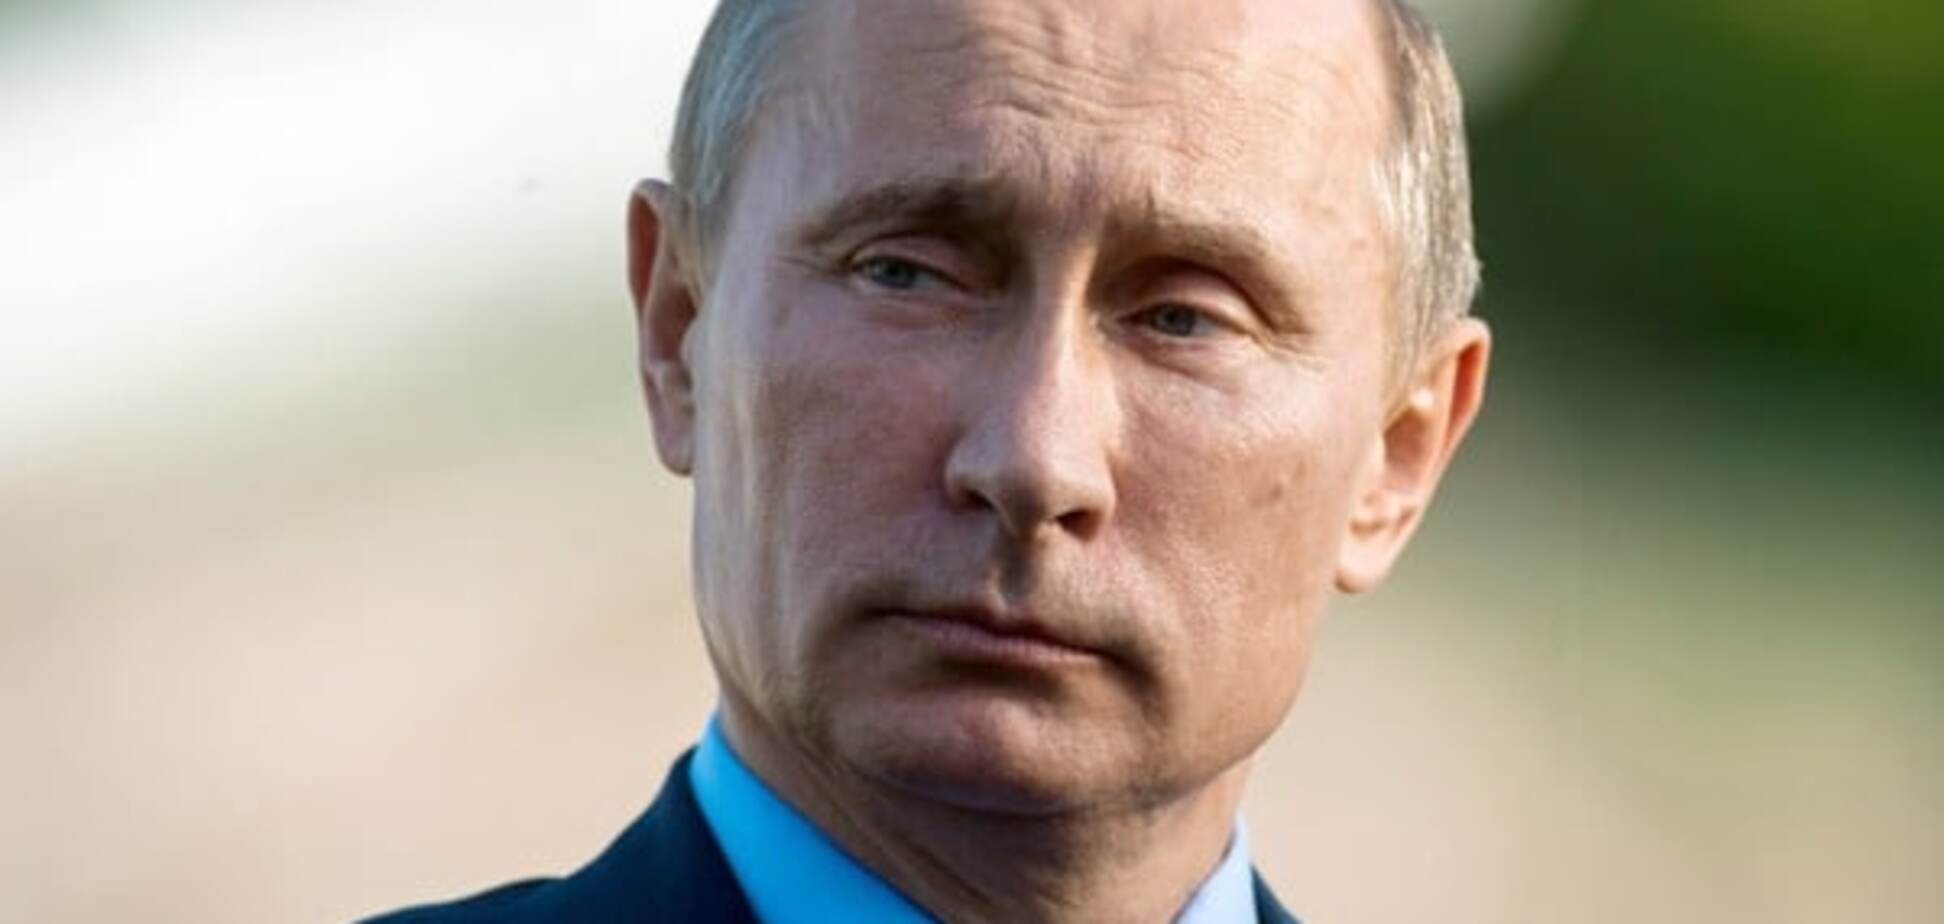 Рот и рука Путина: Слава Рабинович раскрыл тайны президента России